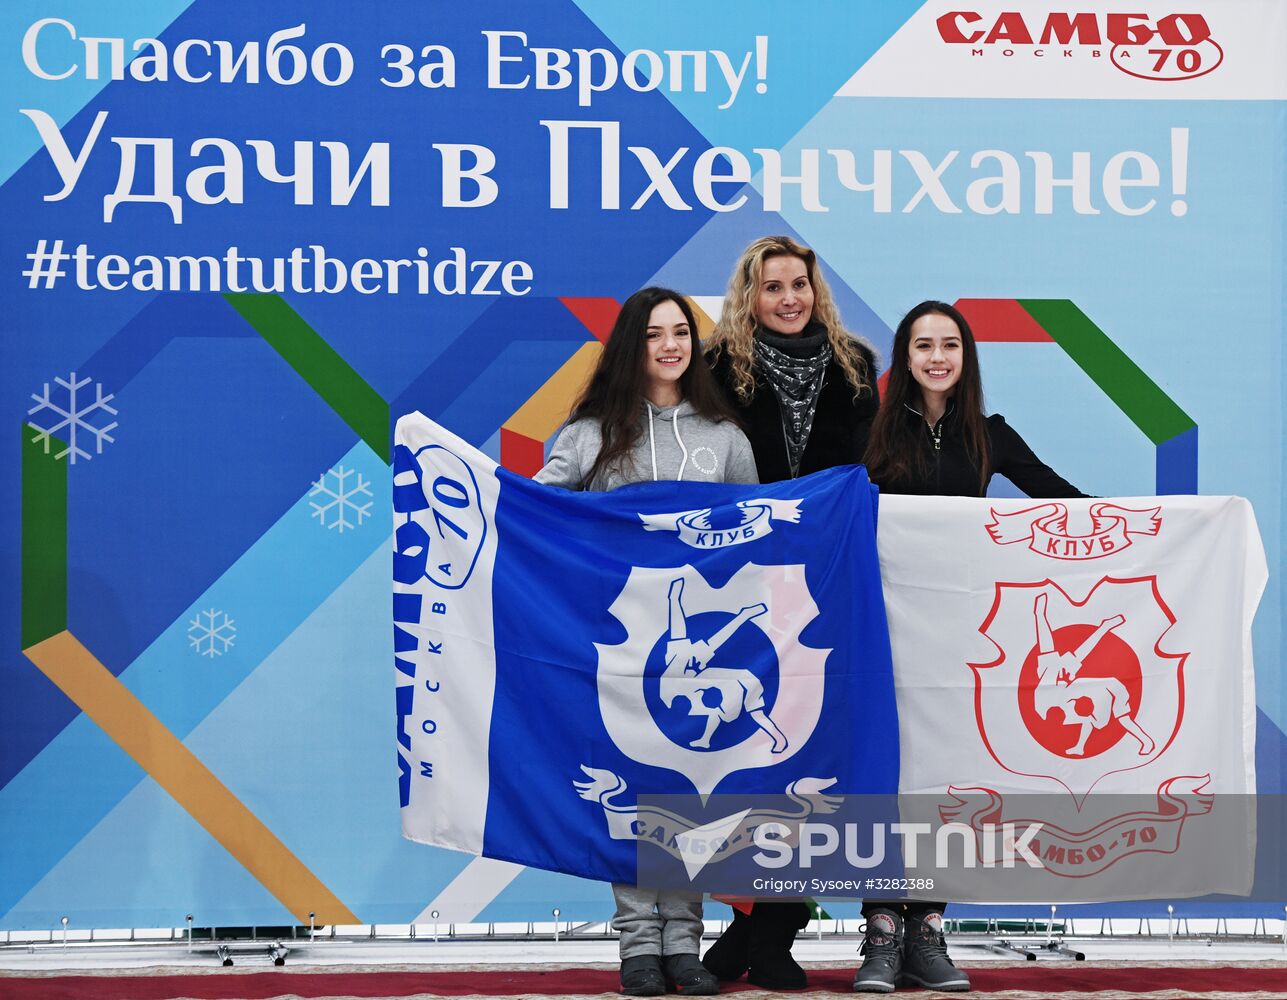 Figure skaters Medvedeva and Zagitova are seen off to PyeongChang Olympics